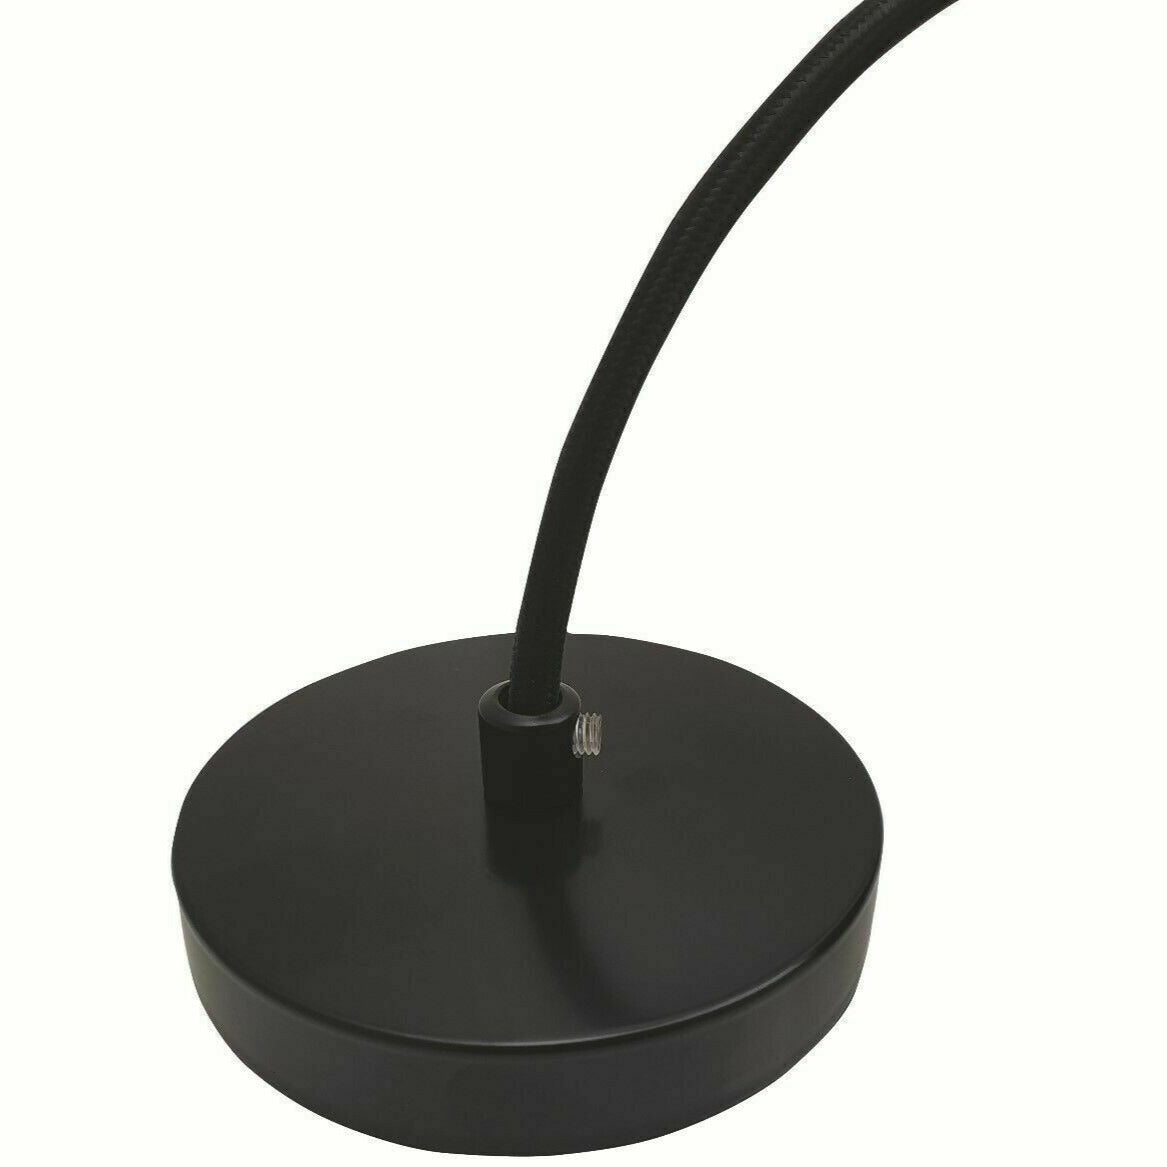 modern ceiling pendant lamp cage fitting black small vintage light~1352 - LEDSone UK Ltd